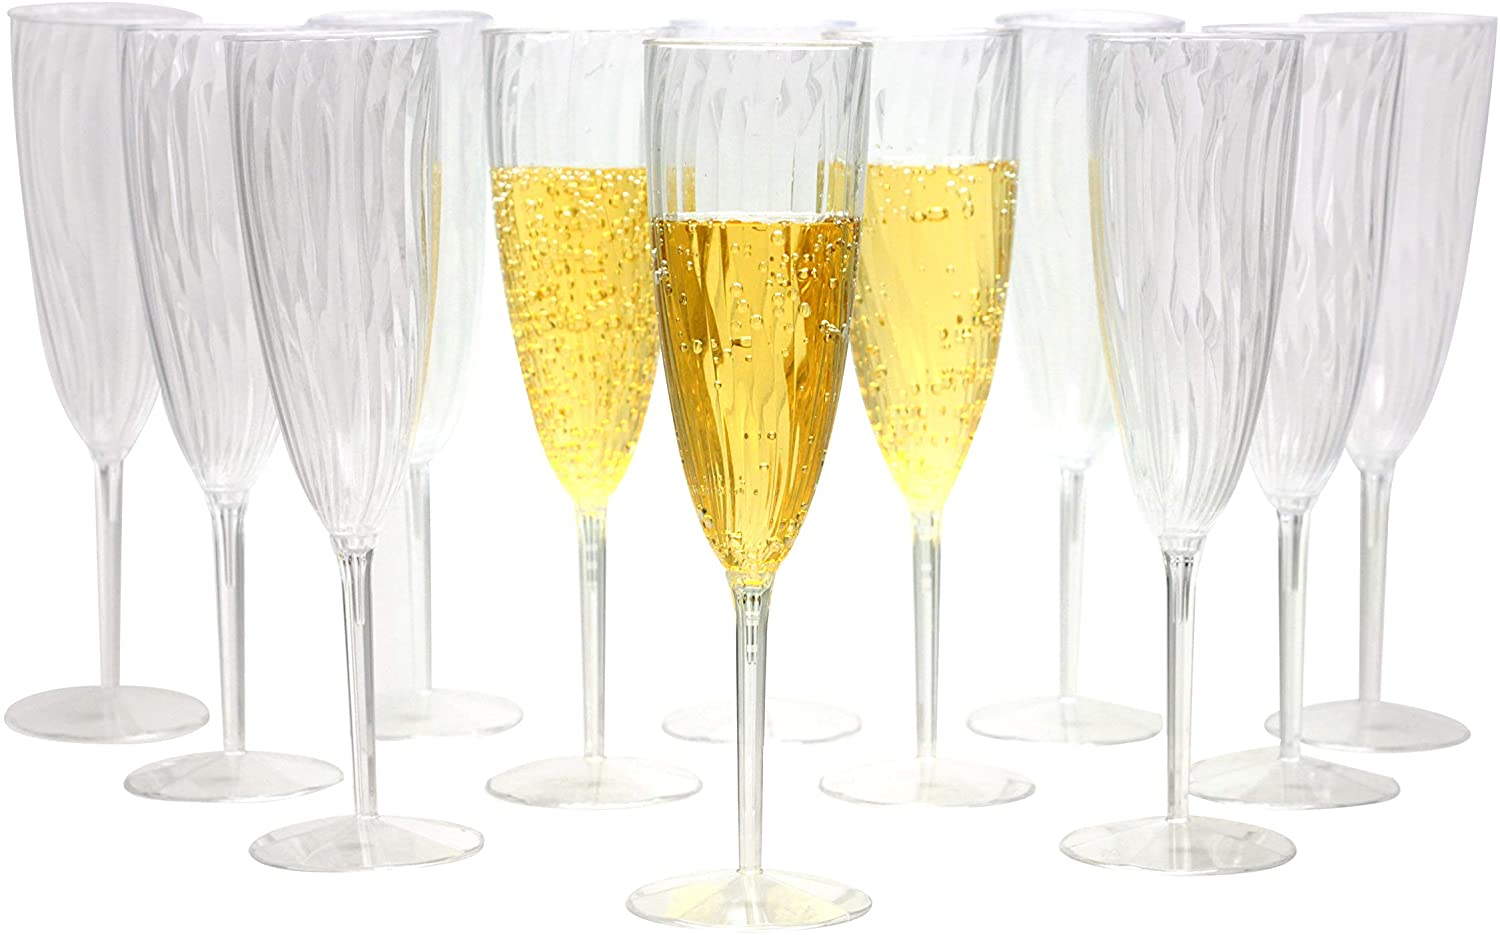 Champagne Tumbler 6 oz – Pro-Elements